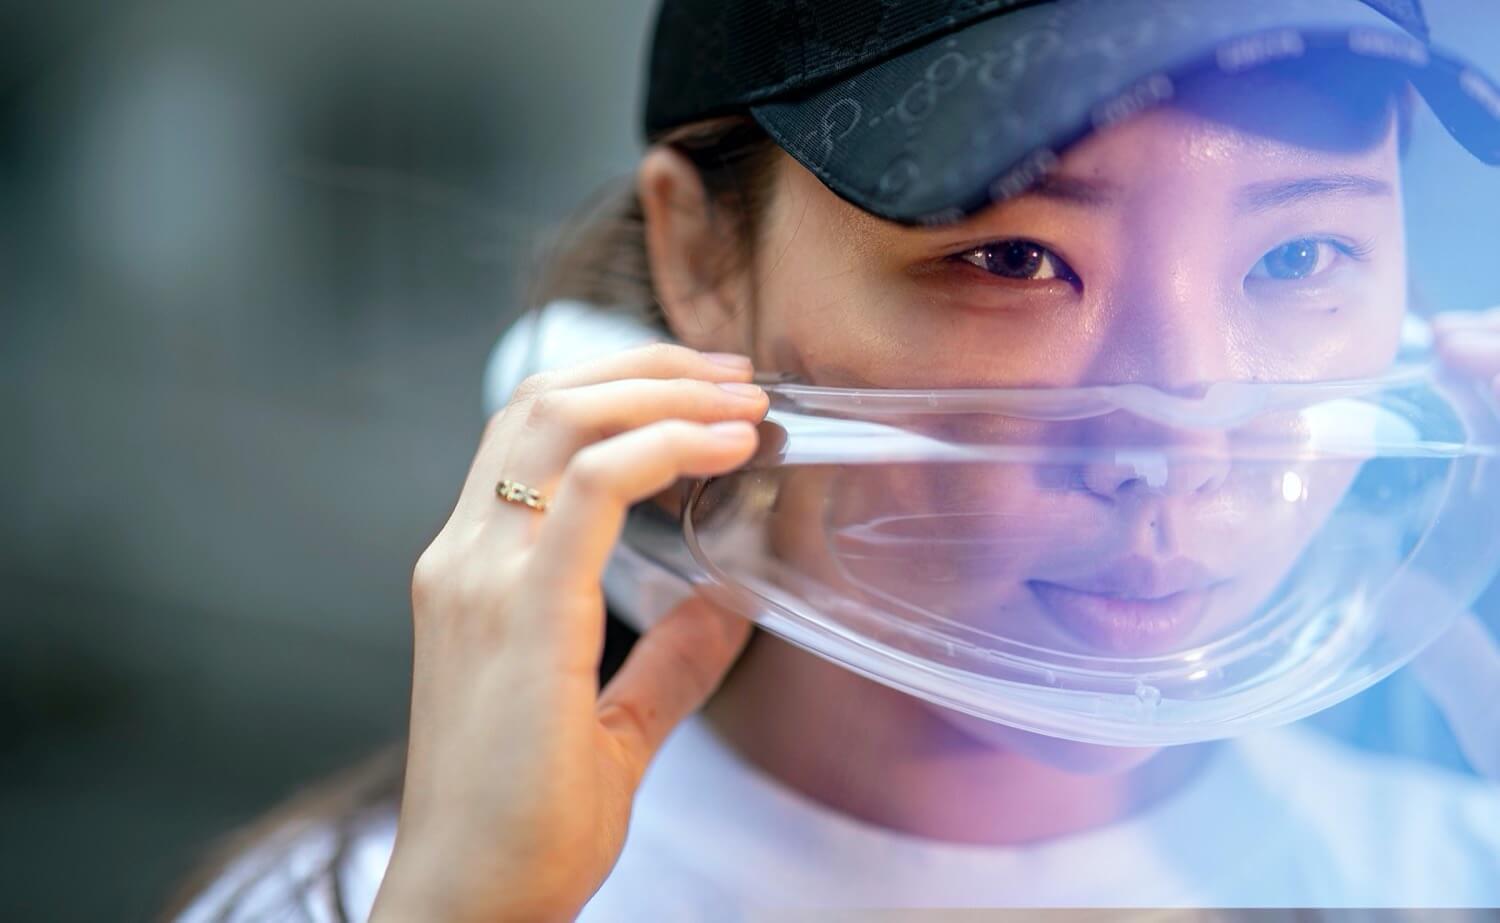 Máscaras de proteção facial, limpeza de ar — a tendência de 2020?